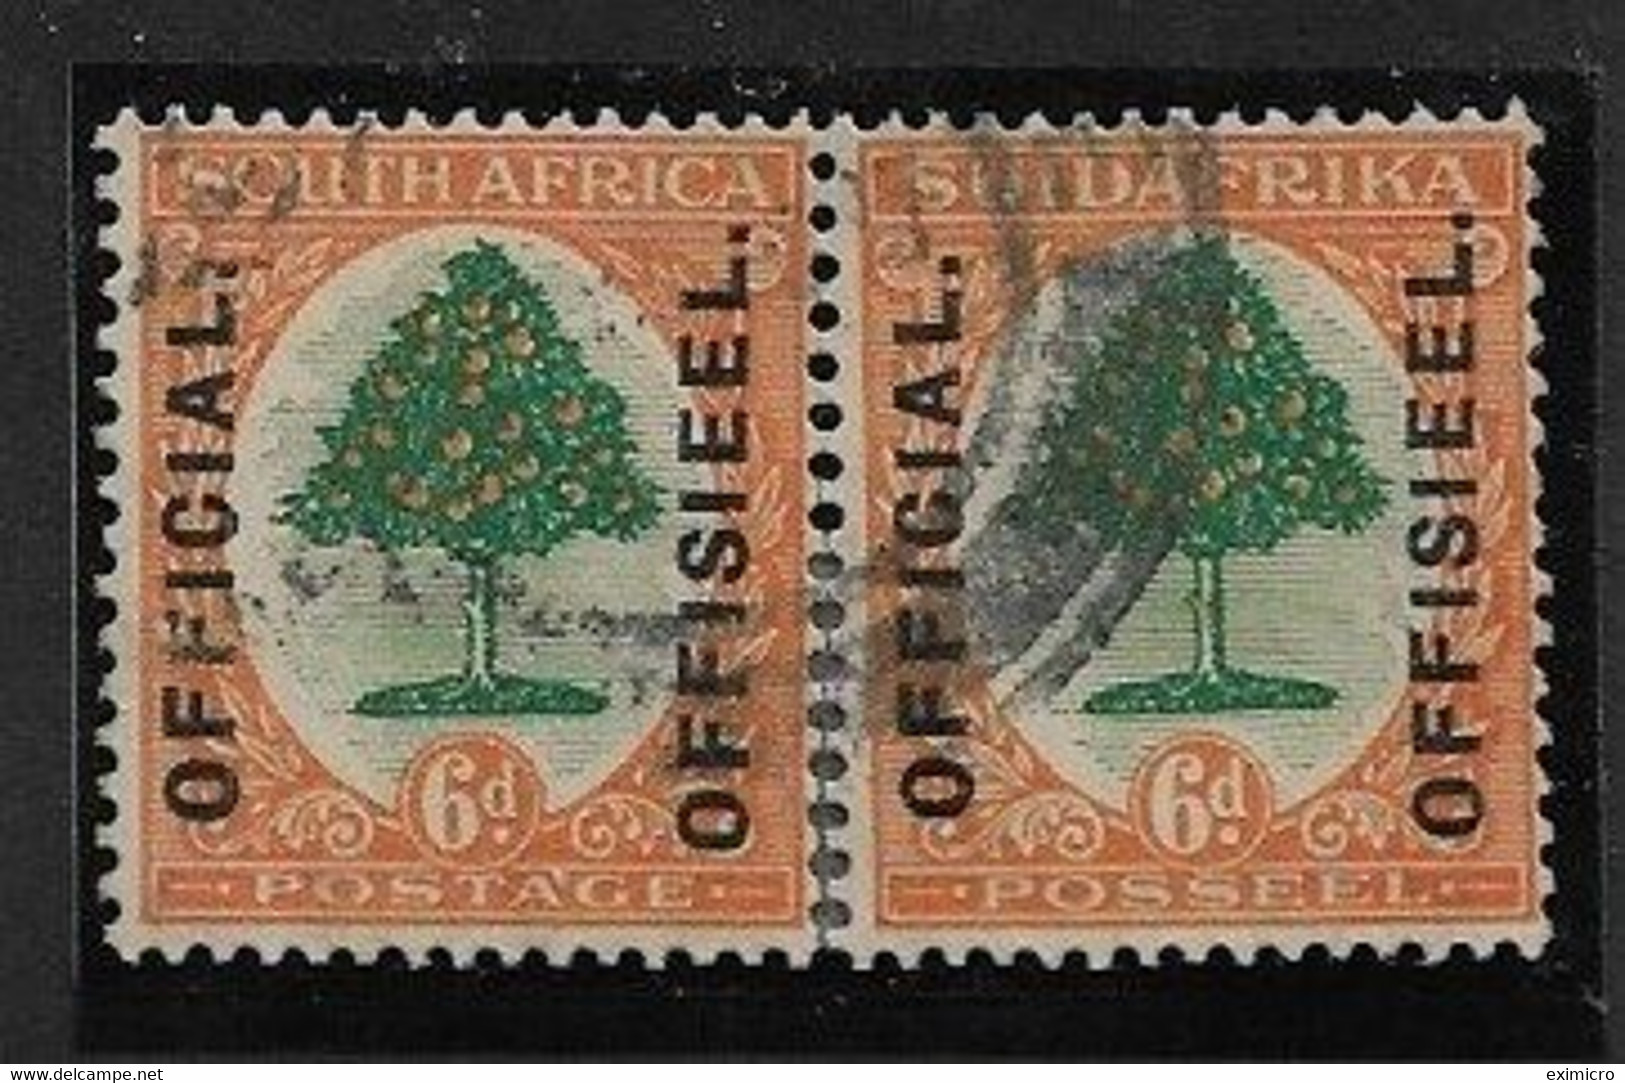 SOUTH AFRICA 1926 6d OFFICIAL BILINGUAL PAIR SG O4 FINE USED Cat £75 - Dienstzegels